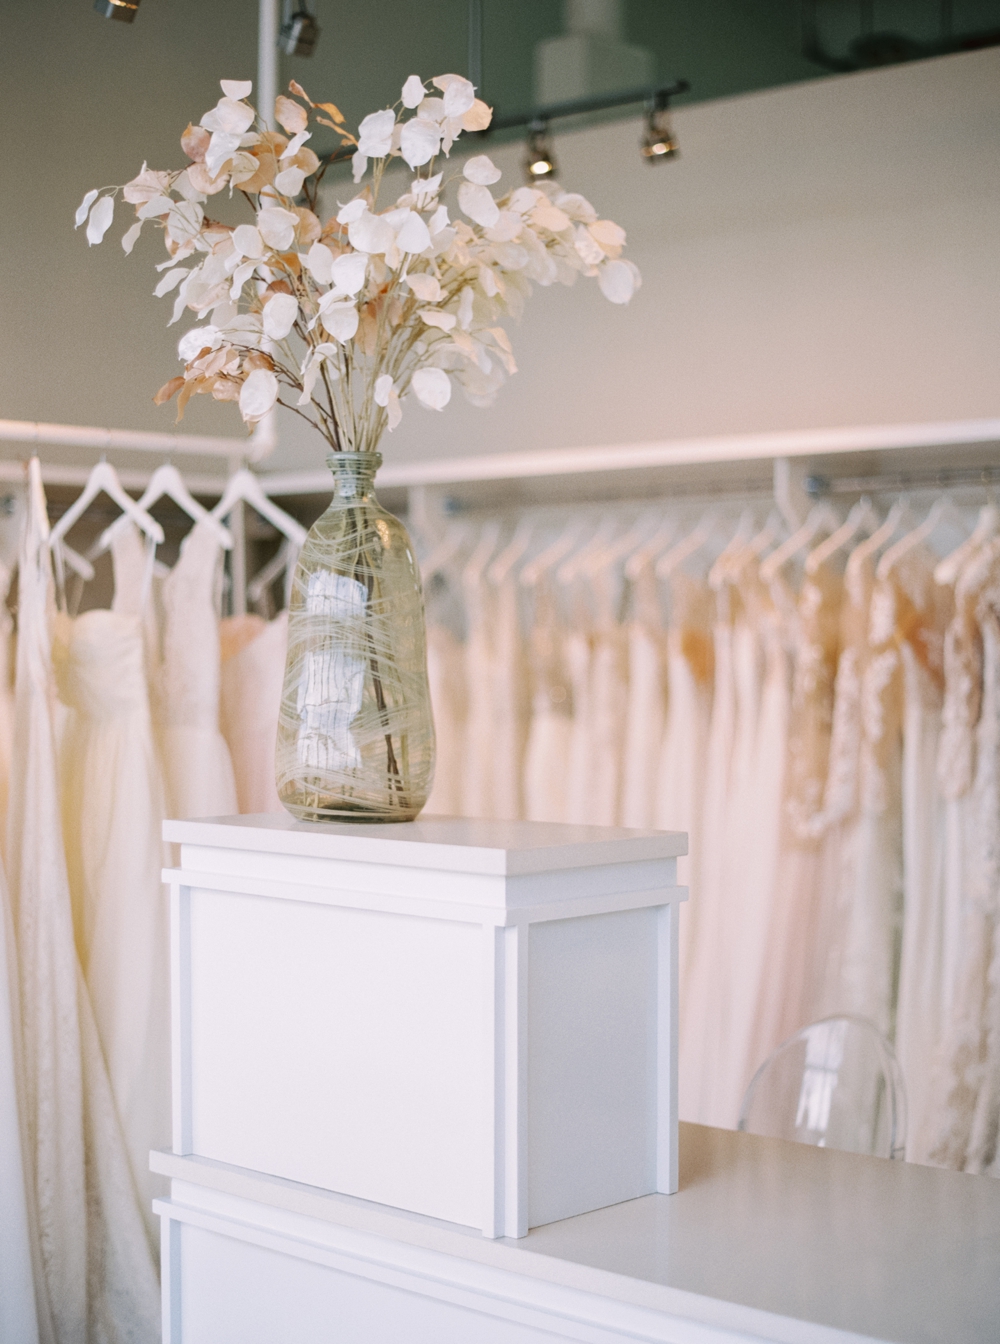 Calgary Wedding Photographers | The Bridal Boutique Calgary | Commercial Photographer | Wedding Dress Editorial